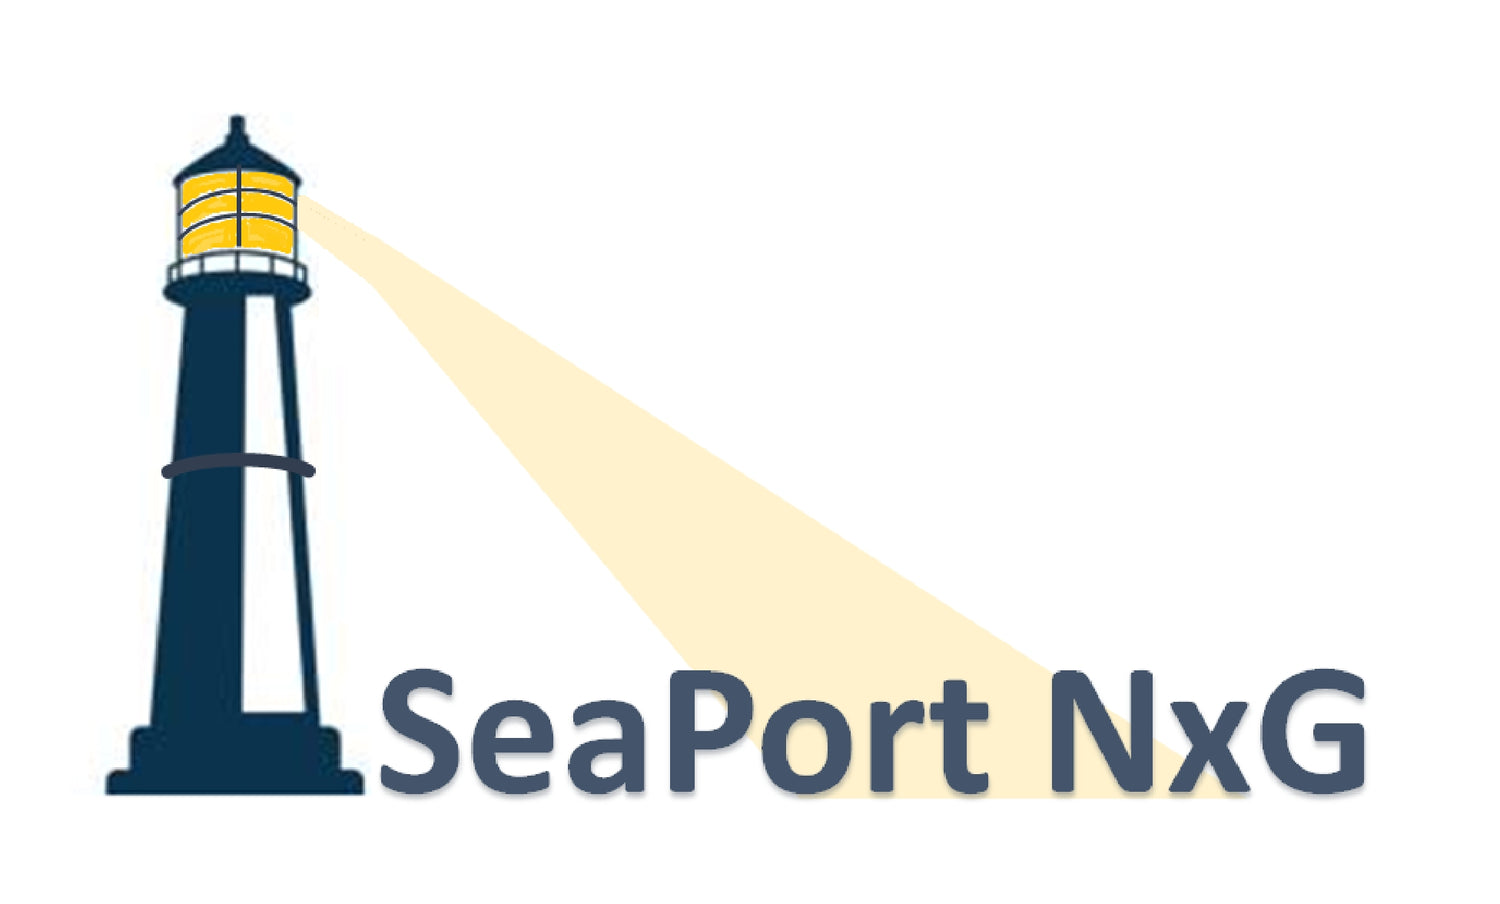 Seaport NXG